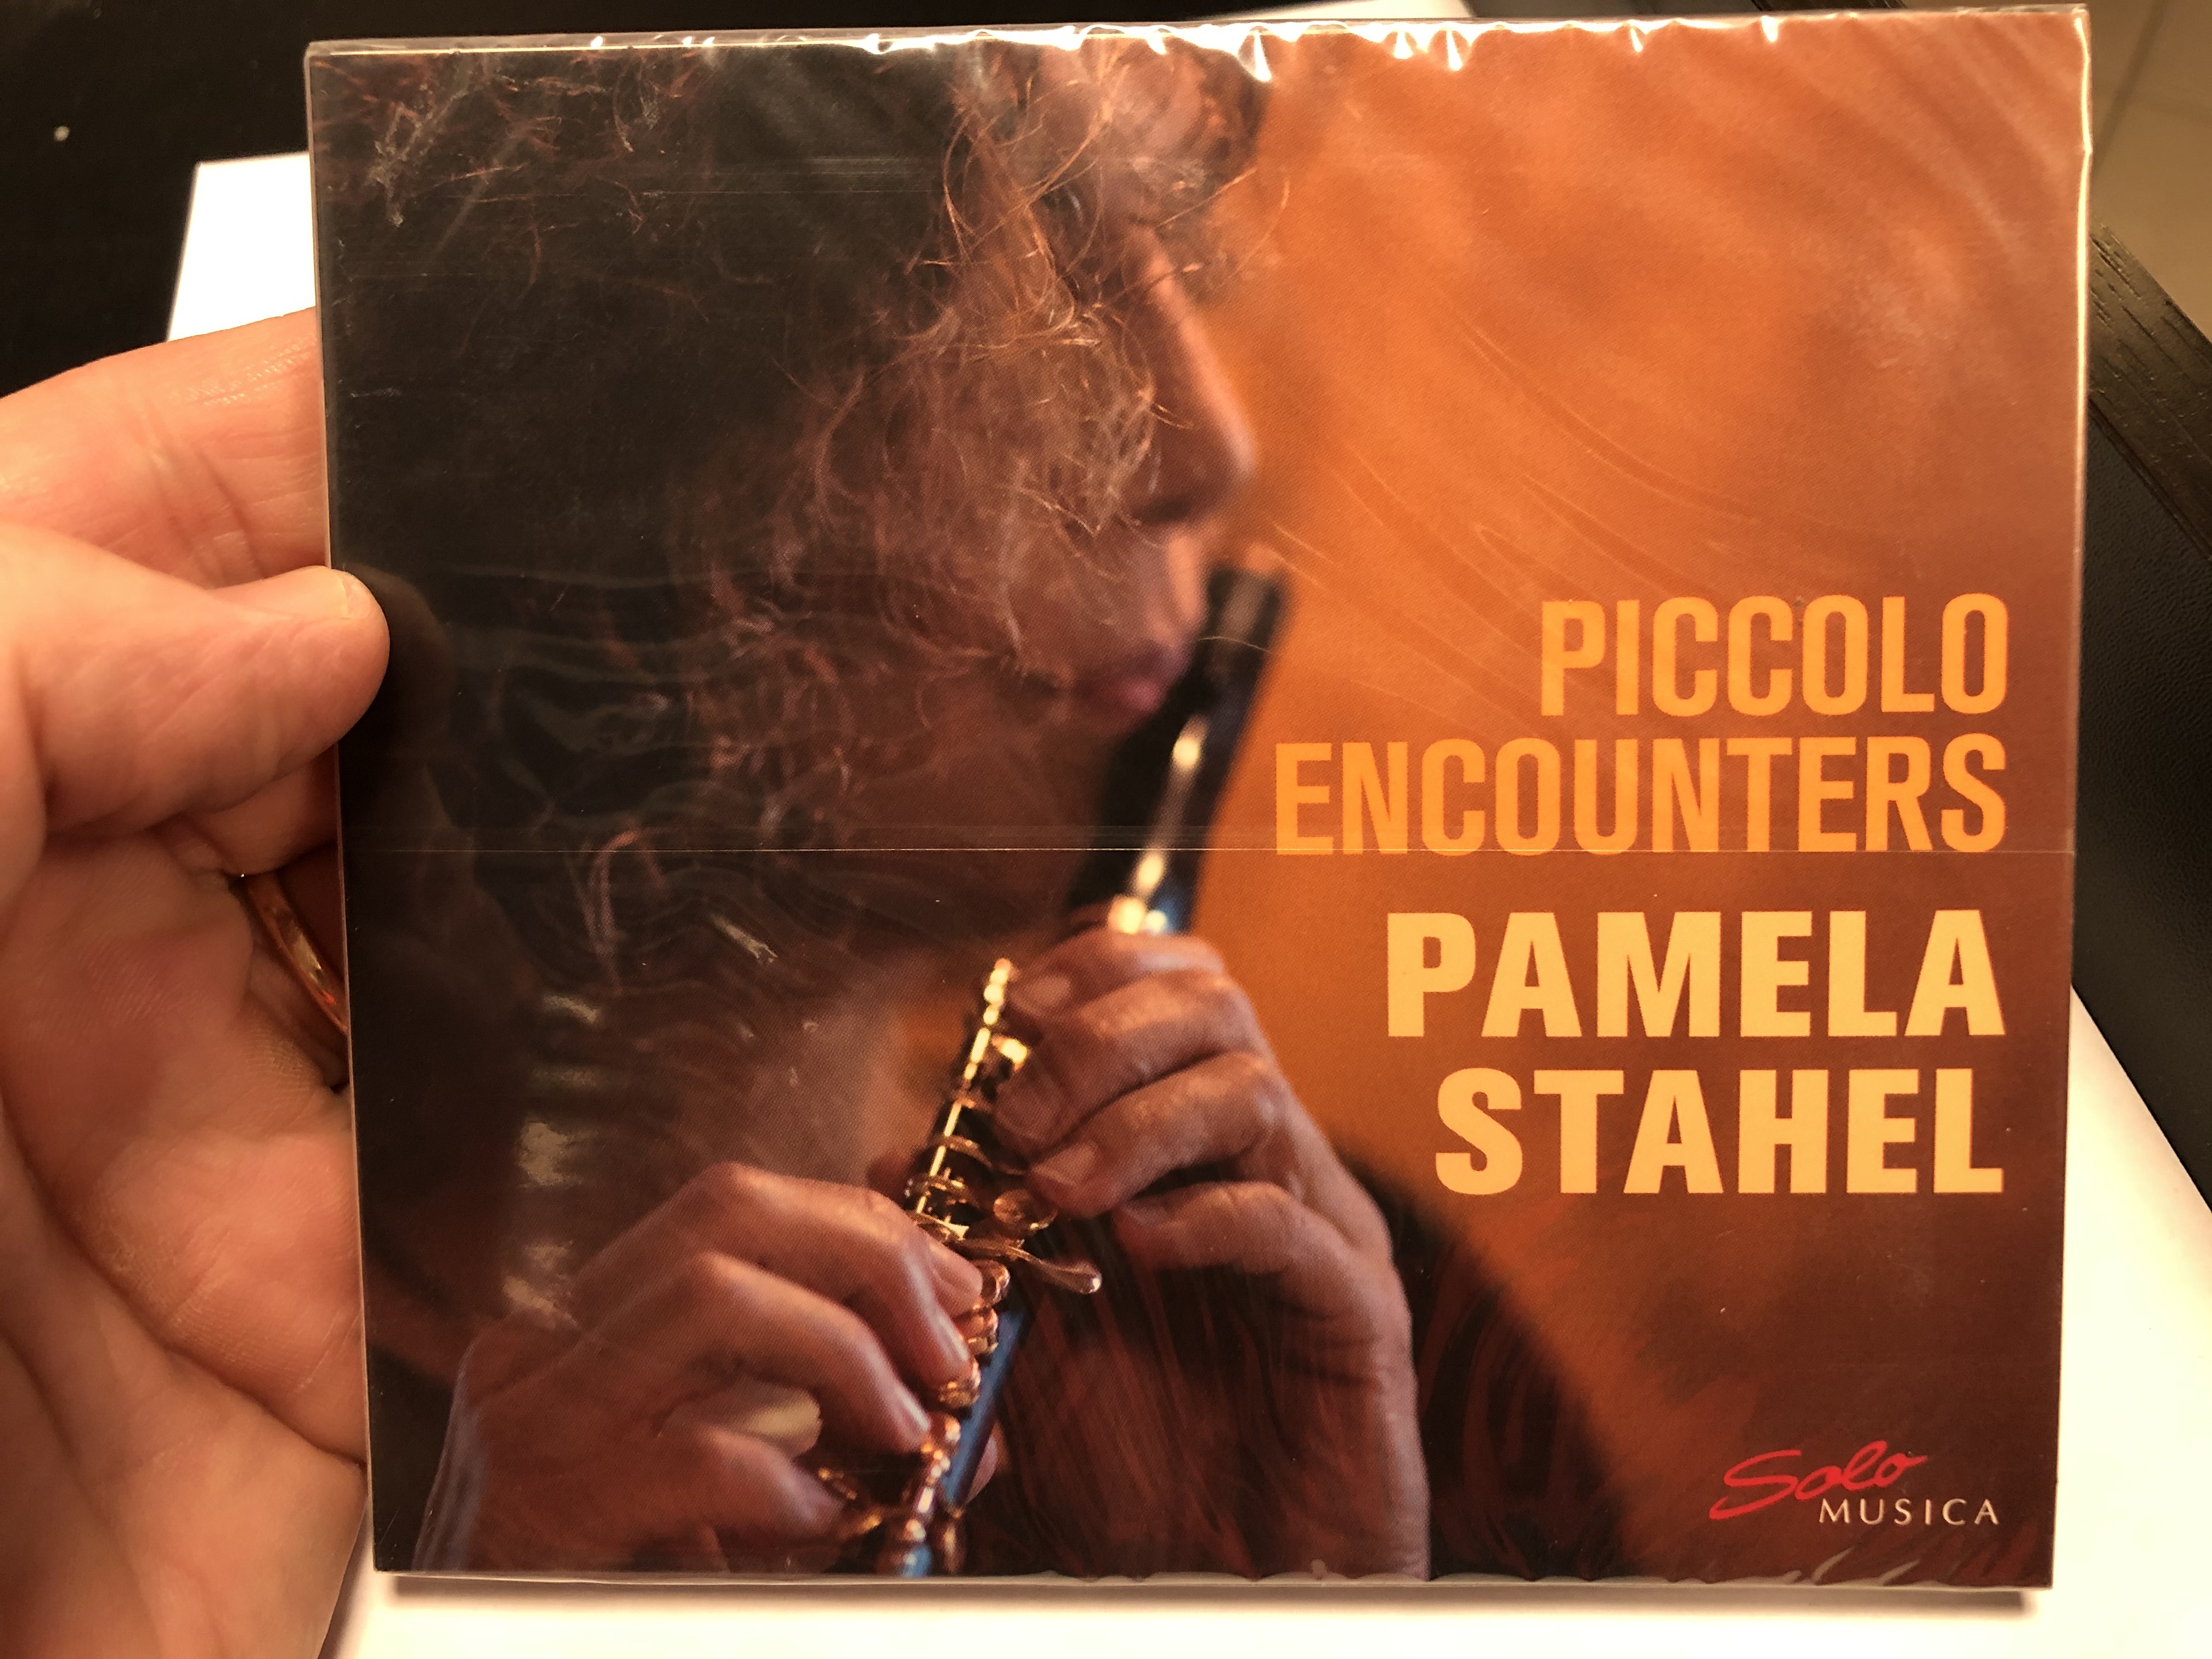 piccolo-encounters-pamela-stahel-solo-musica-audio-cd-2020-sm-329-1-.jpg